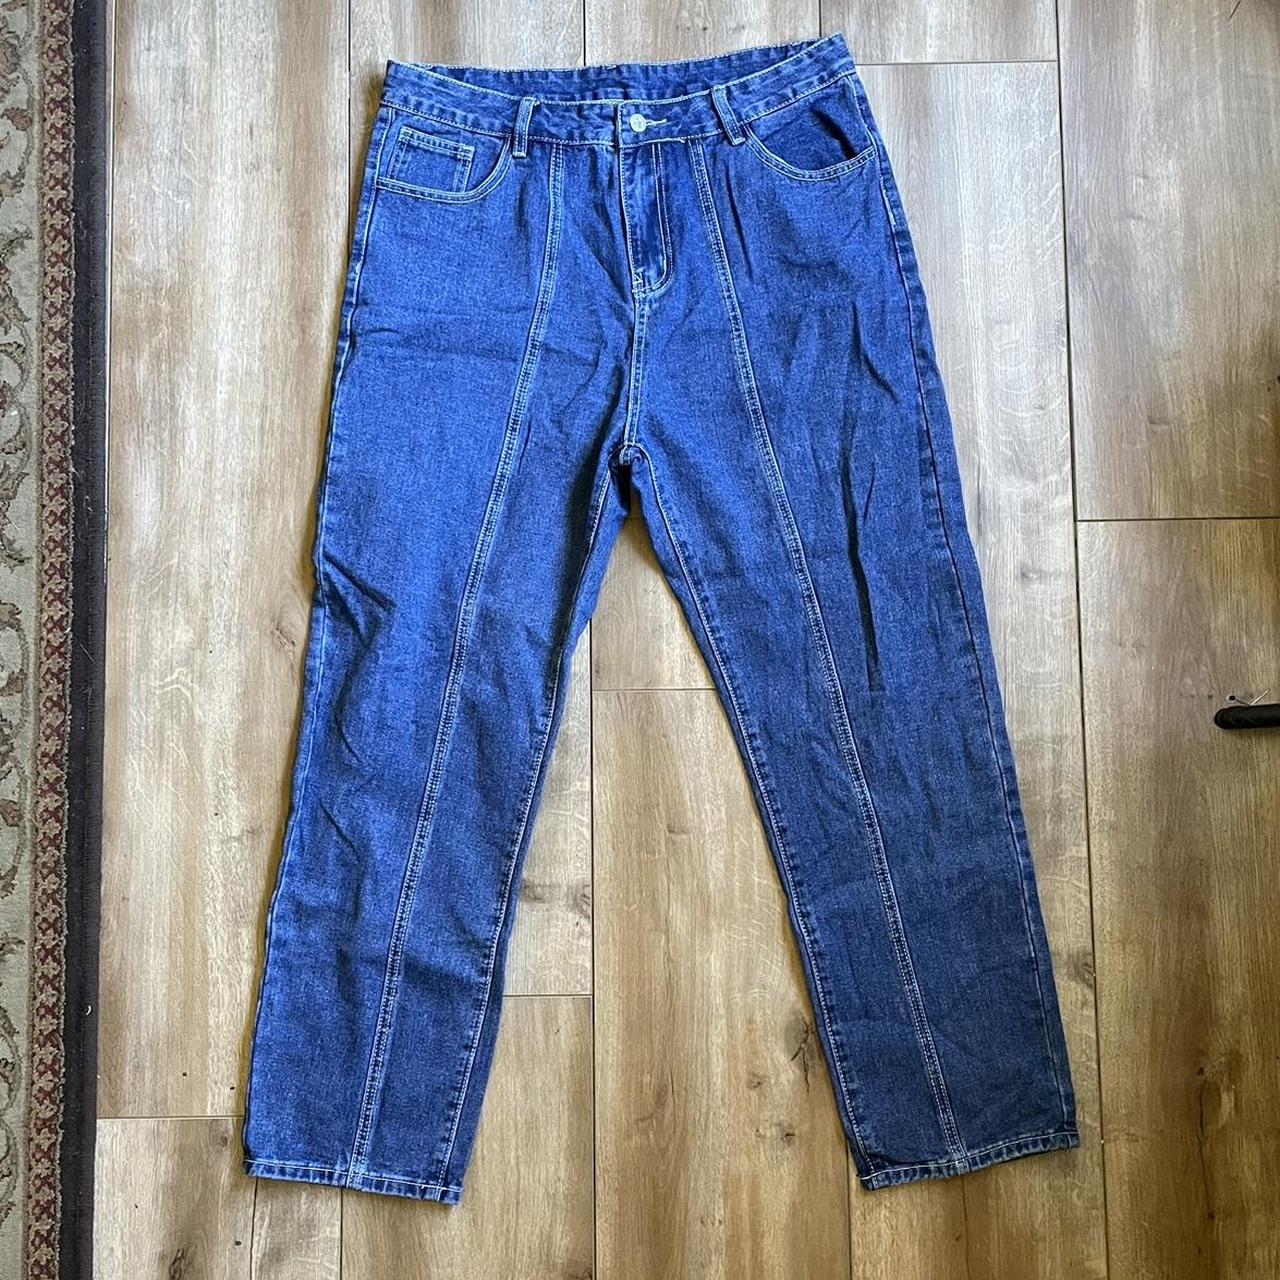 Men’s size 36 (fit like 34) denim jeans - Depop